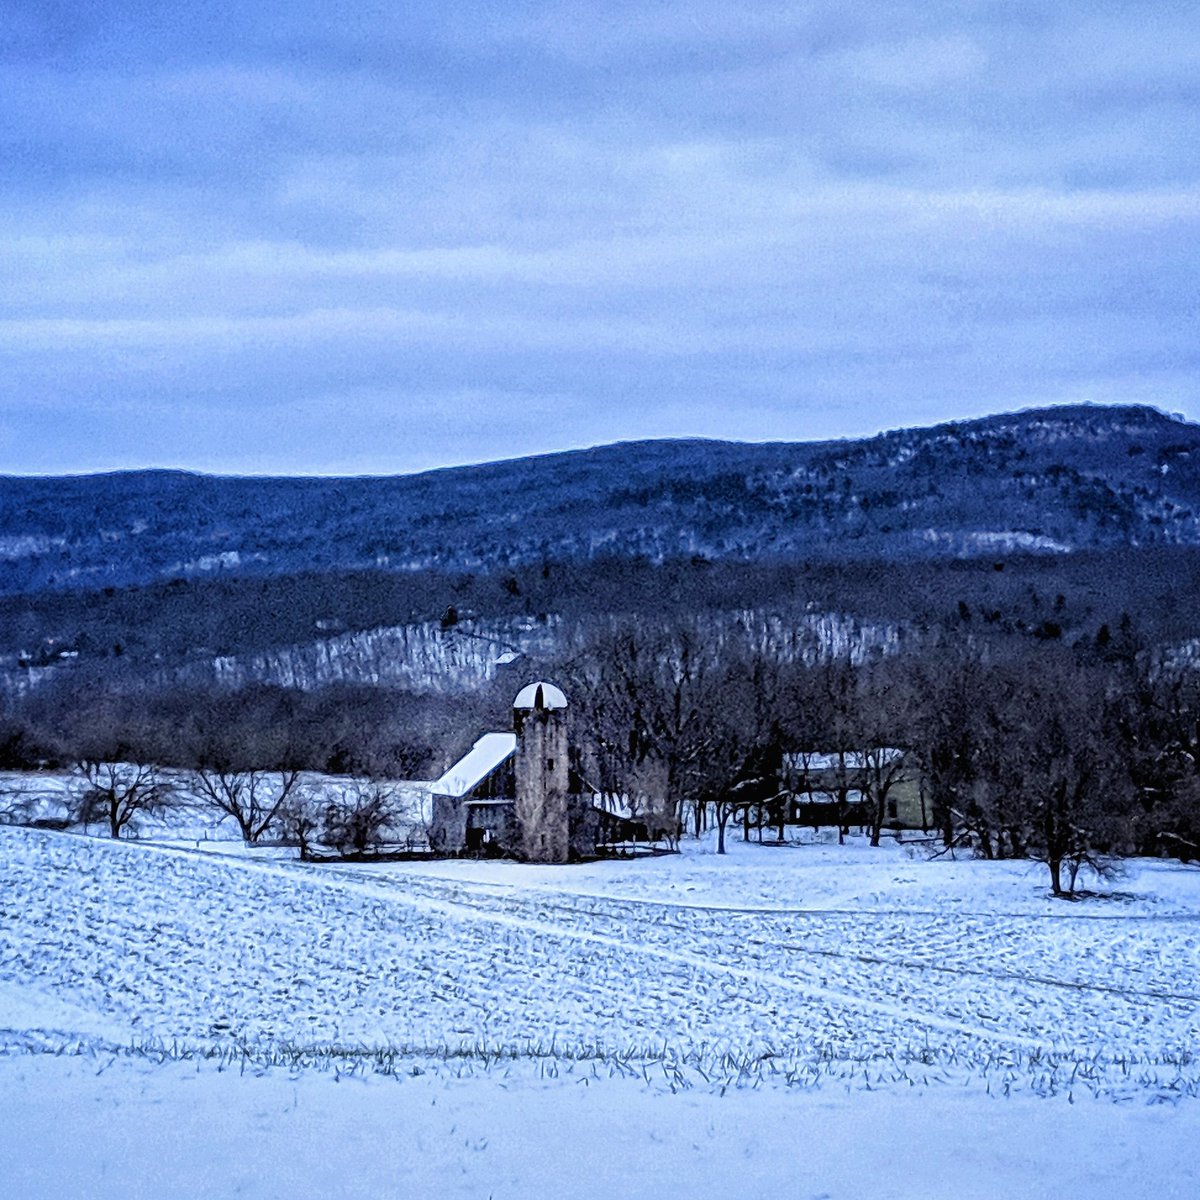 Blue Ridge, Blue Snow, Blue Sky.
Virginia Winter Sunset.
#nature #NaturePhotography #photography #naturelovers #naturelovers #scenicvirginia #landscape_capture #landscape_lovers #landscape #landscapephotography #sunset #winter #snow #beauty #outdoors #optoutside